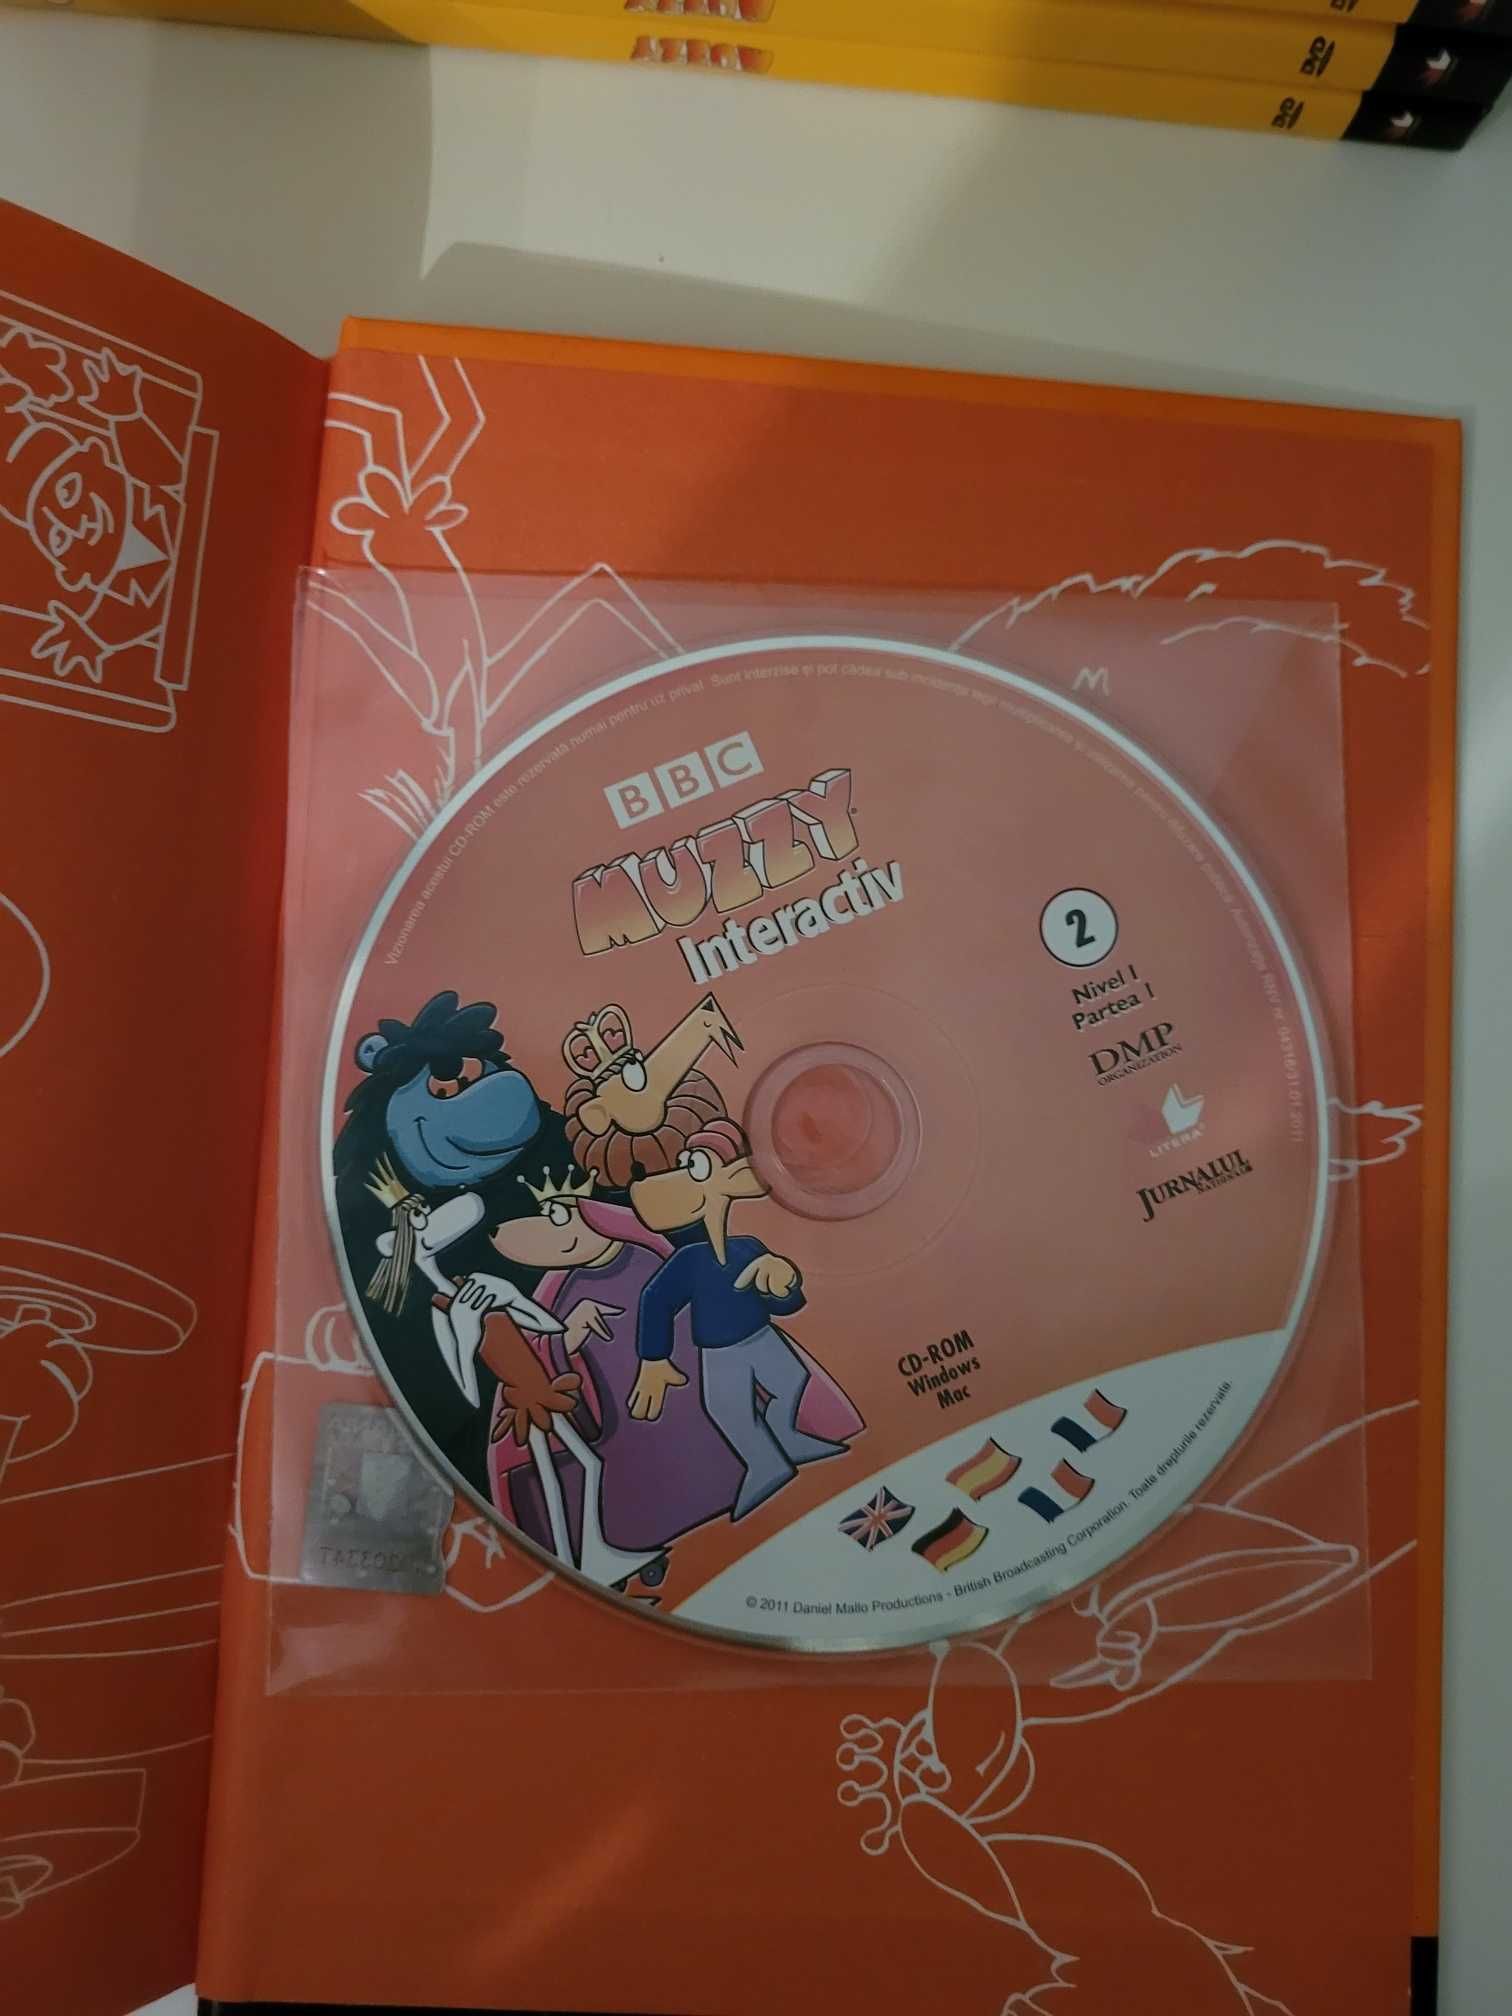 Colectie BBC Muzzy curs multiligvistic  8 DVD-uri, 3 CD-uri, 11 carti